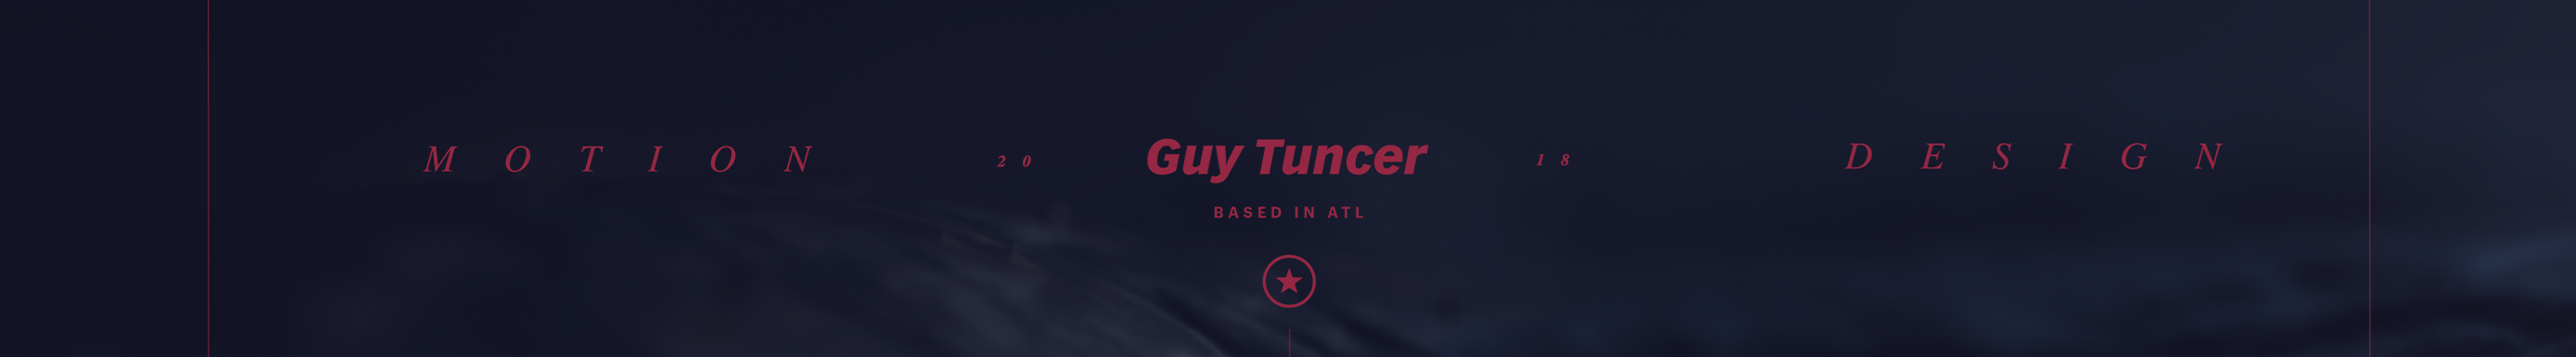 Guy Tuncer's profile banner